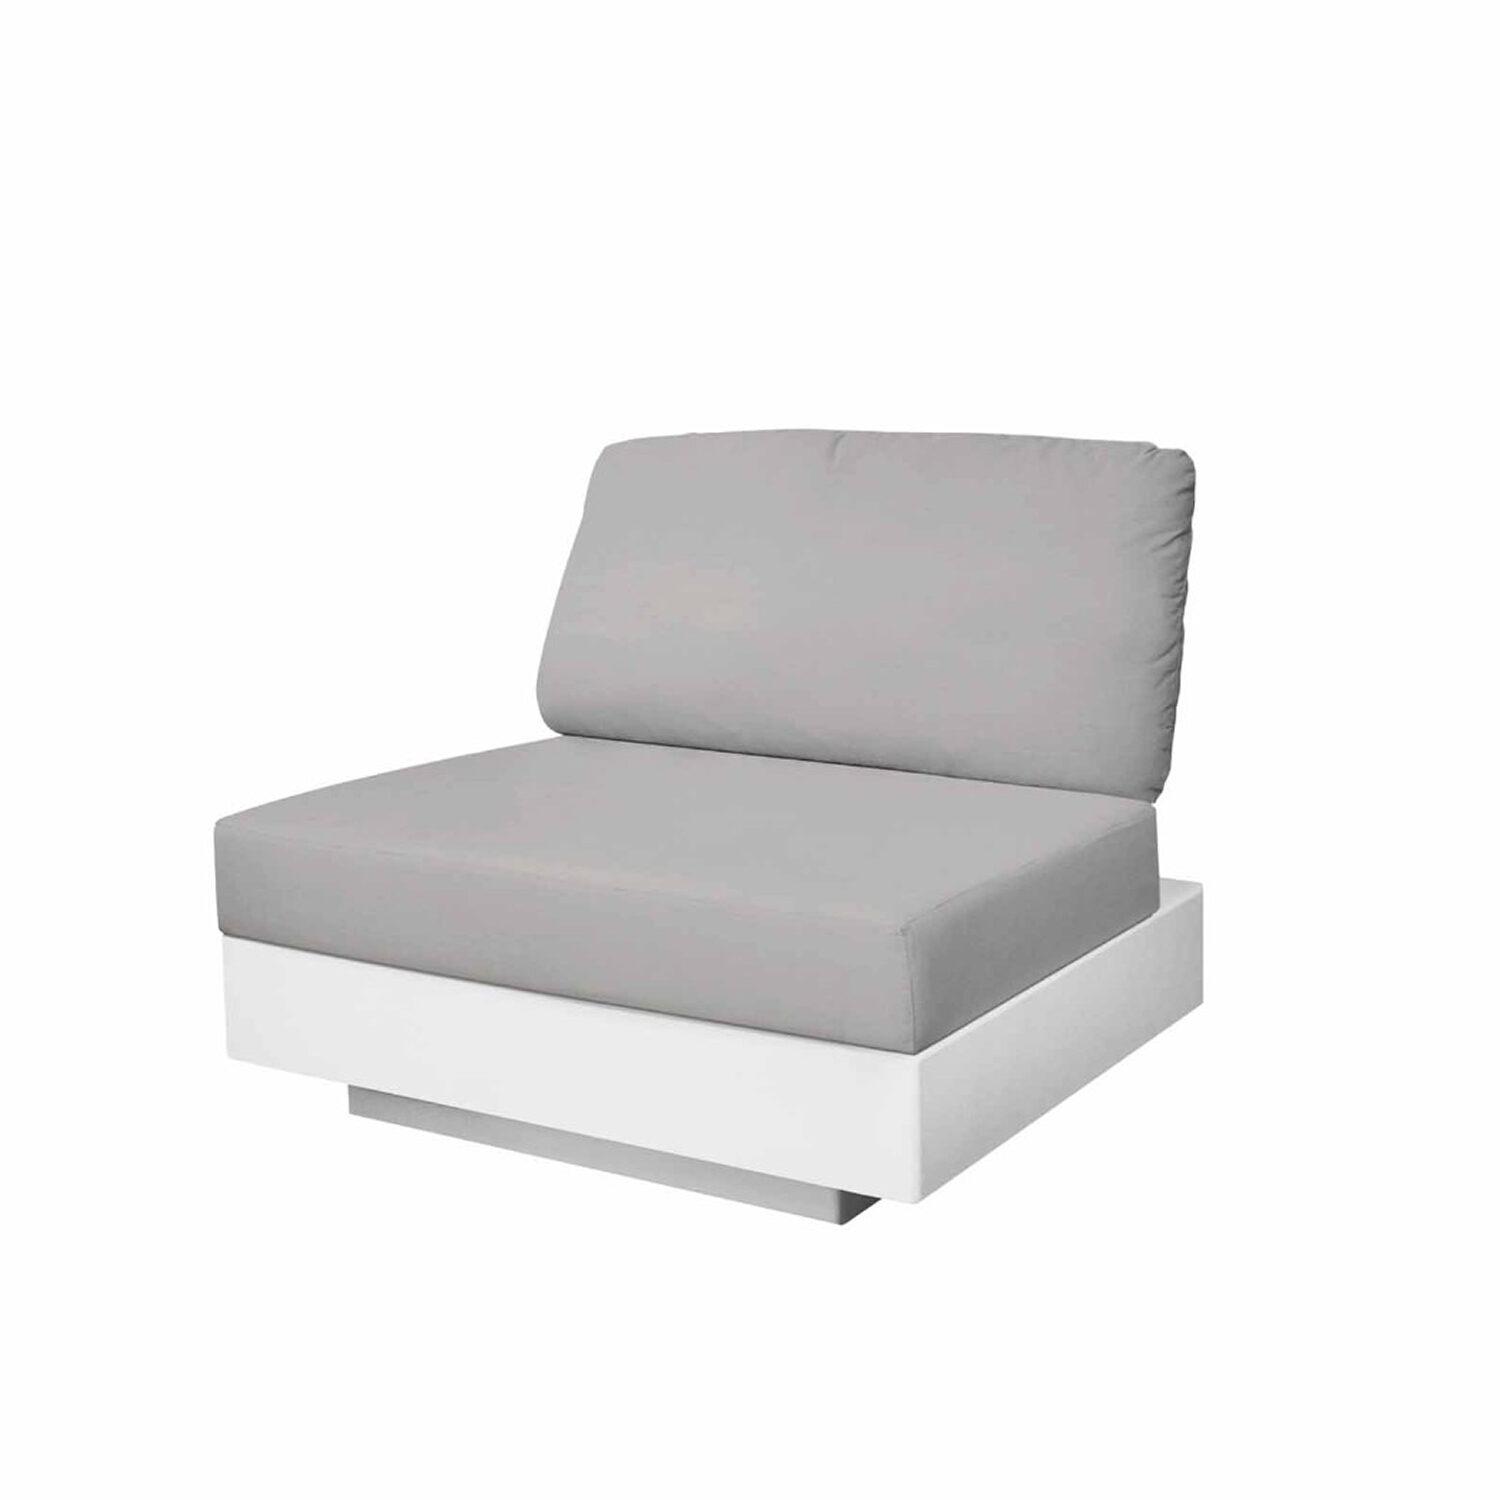 NORDIC modular sofa, 1 to 5 seater